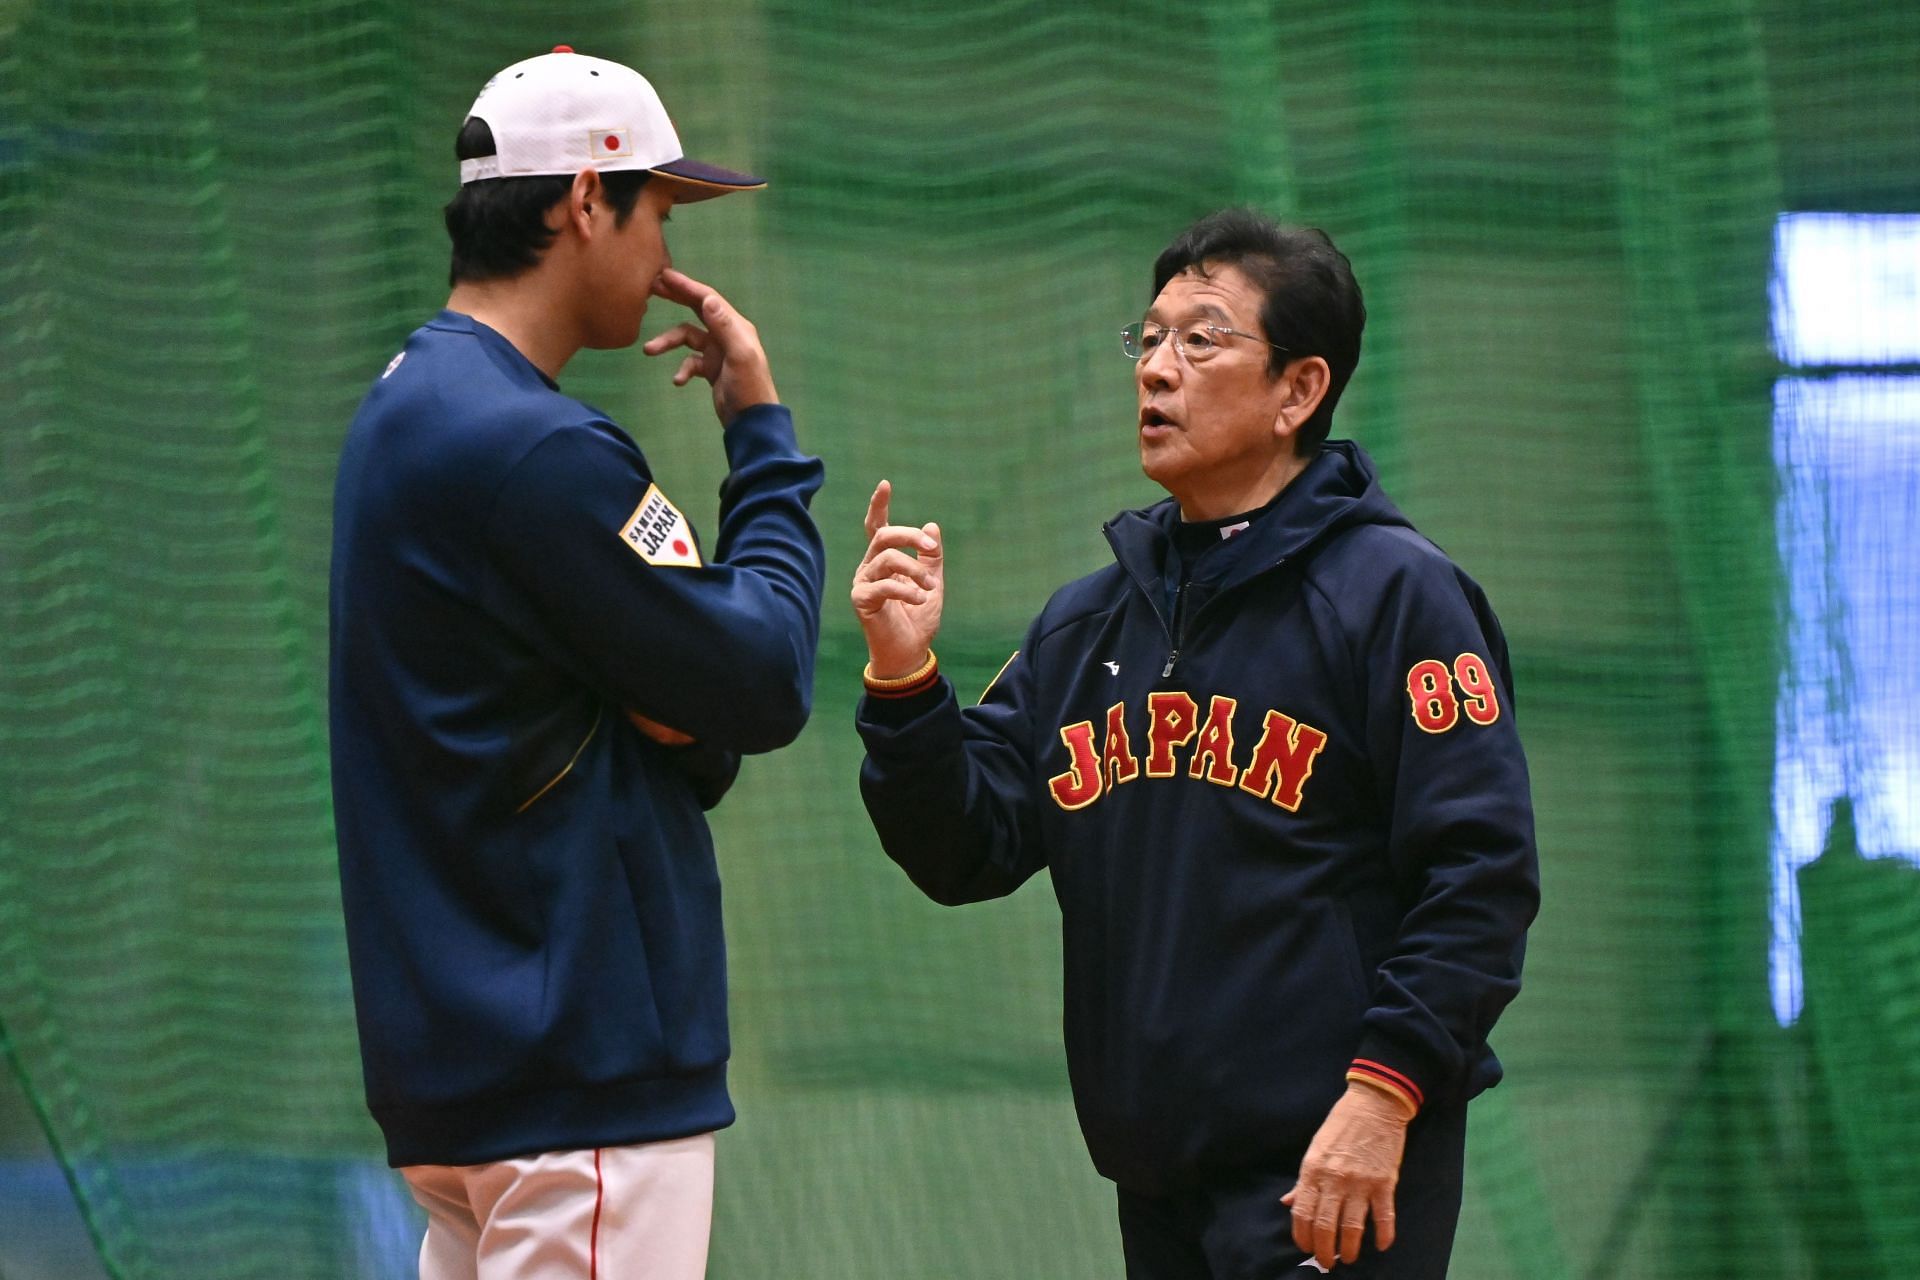 Baseball Podcaster confirms Manager Kuriyama has officially